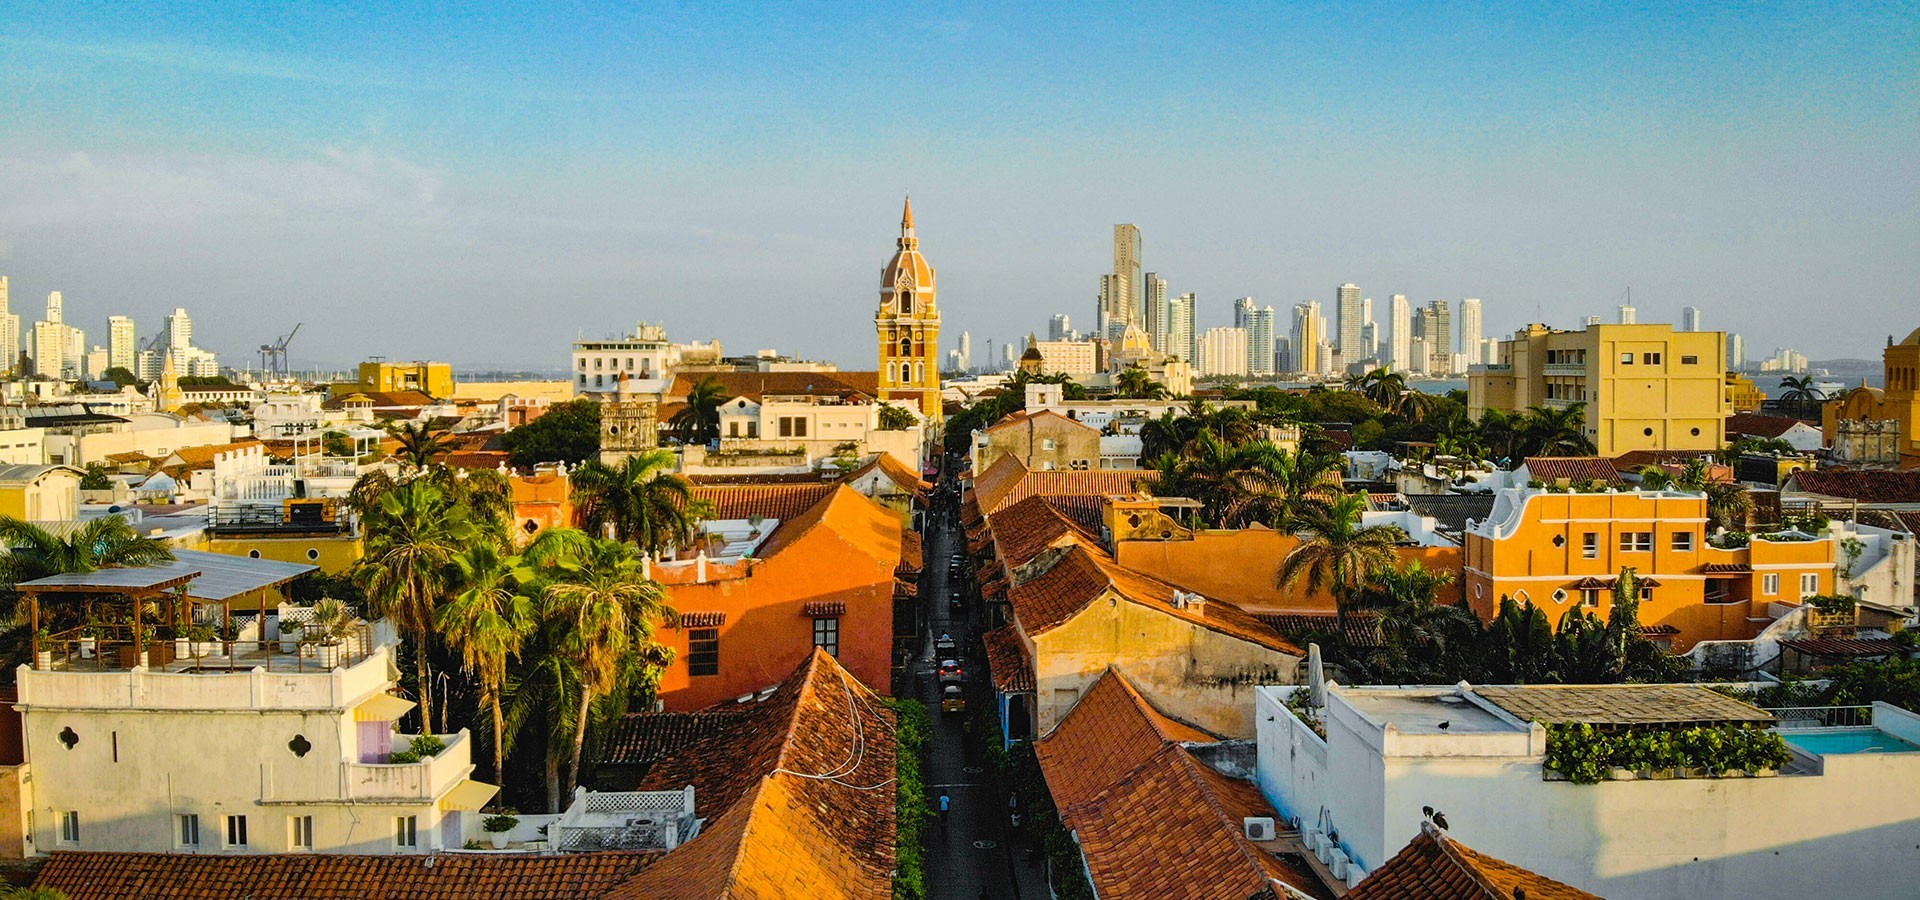 Cartagena de Indias, the best tourist destination